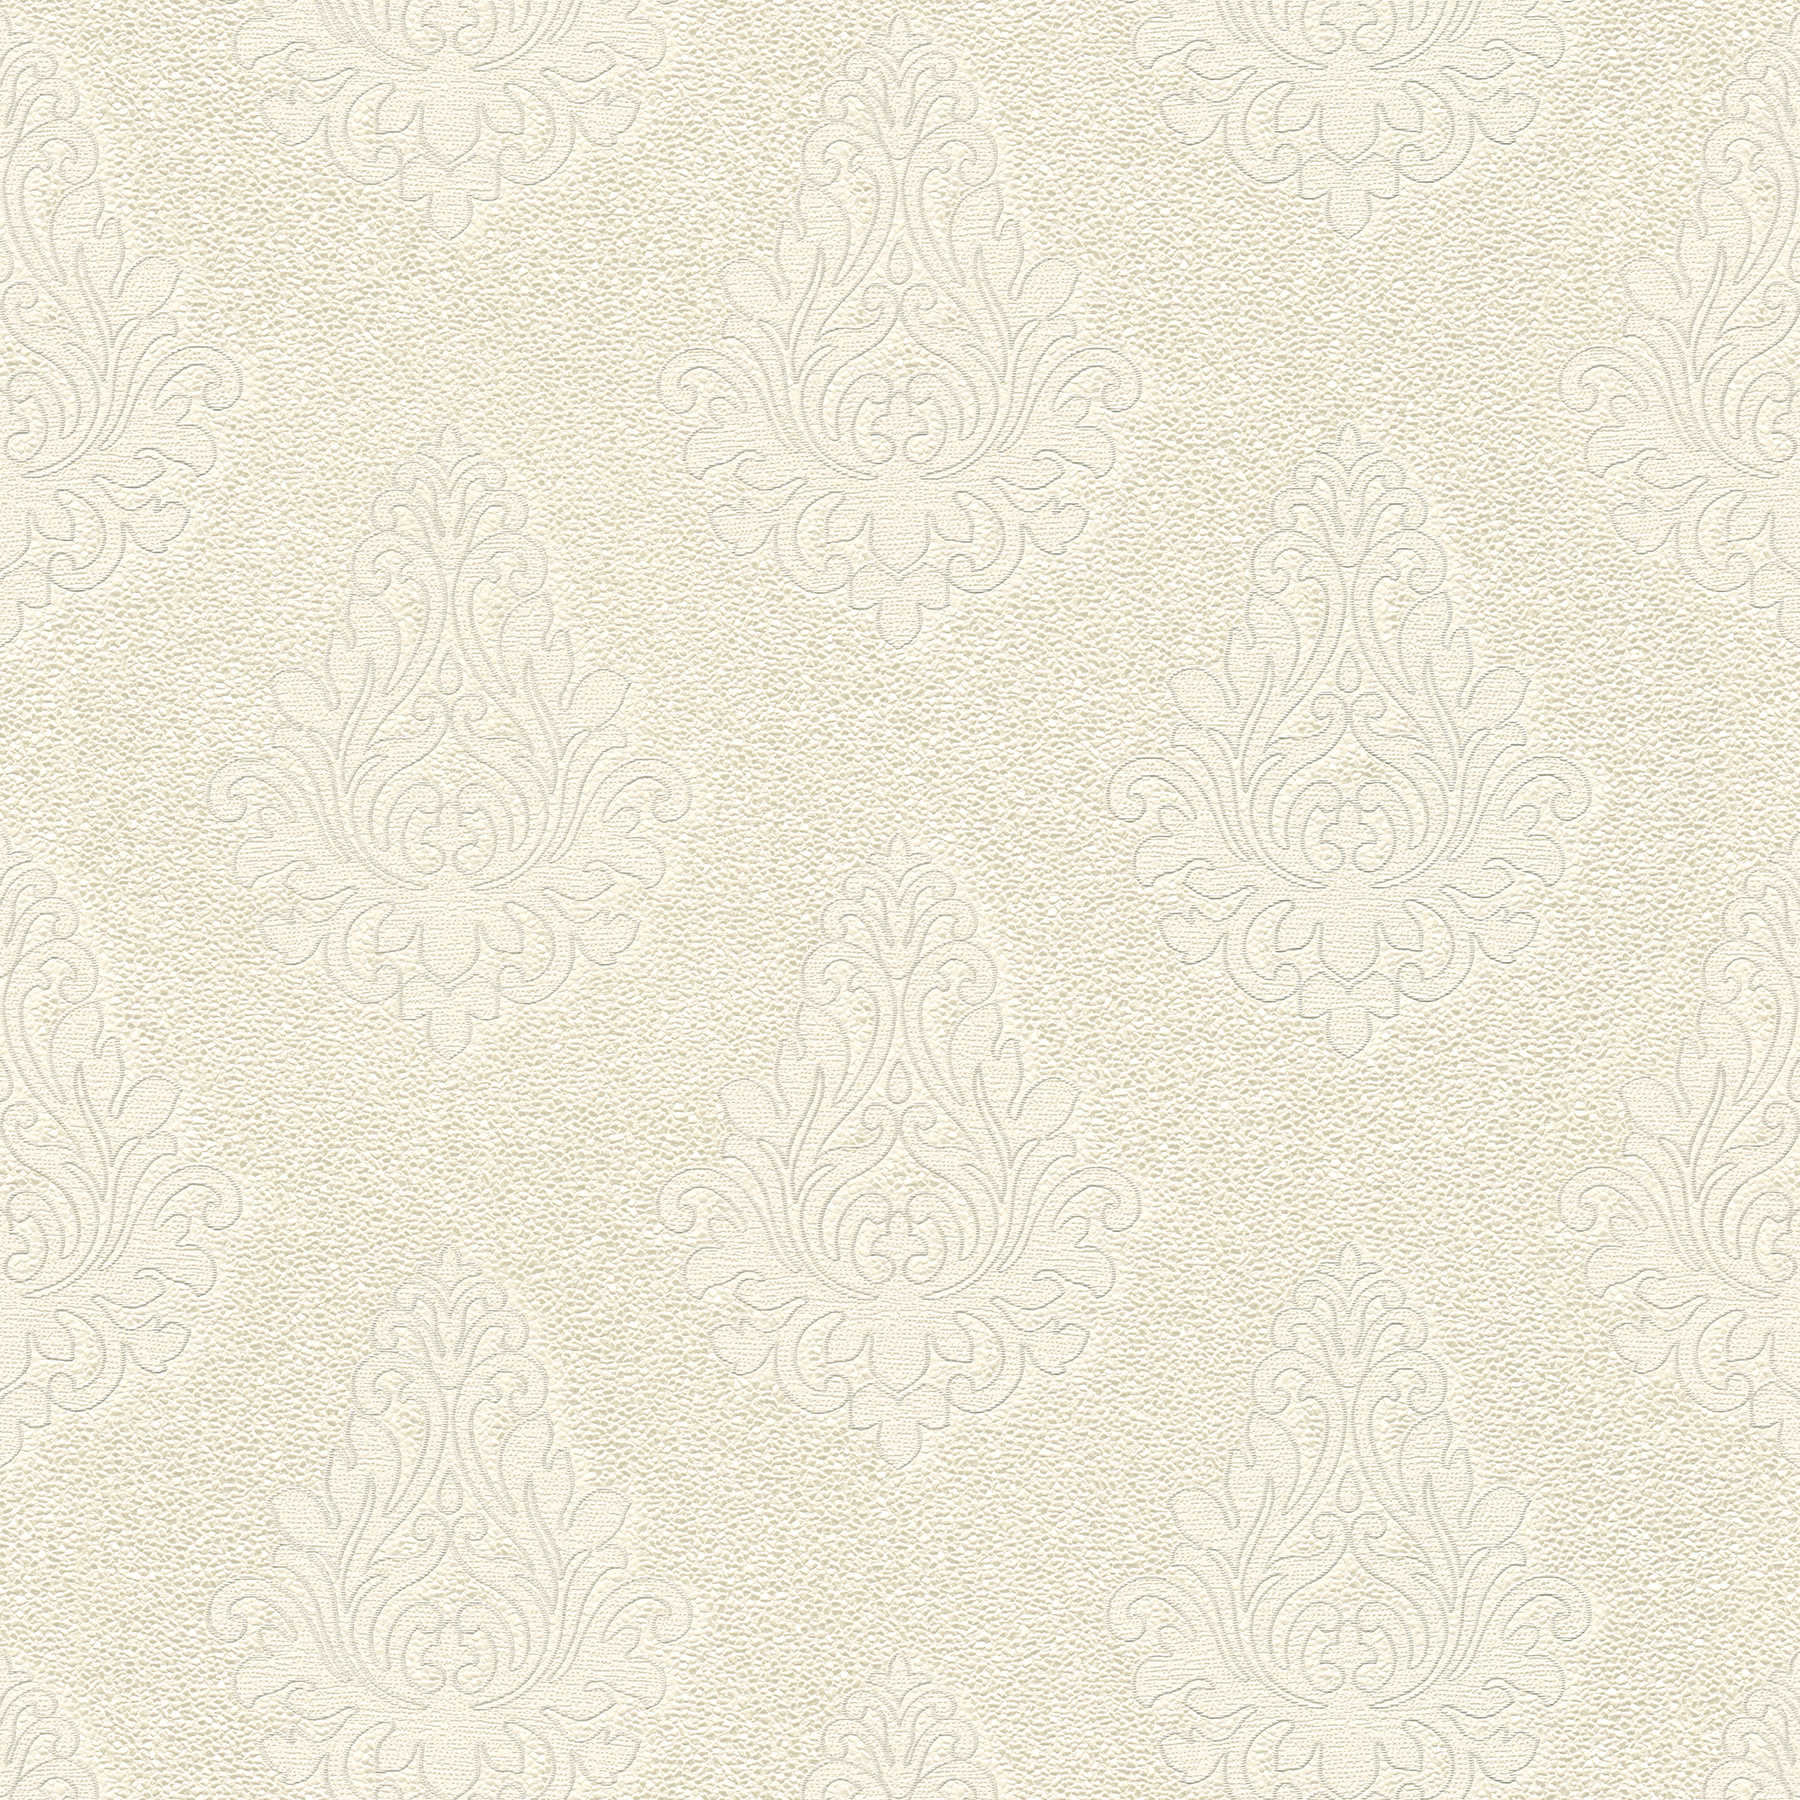         Ornament wallpaper textured with metallic effect - cream
    